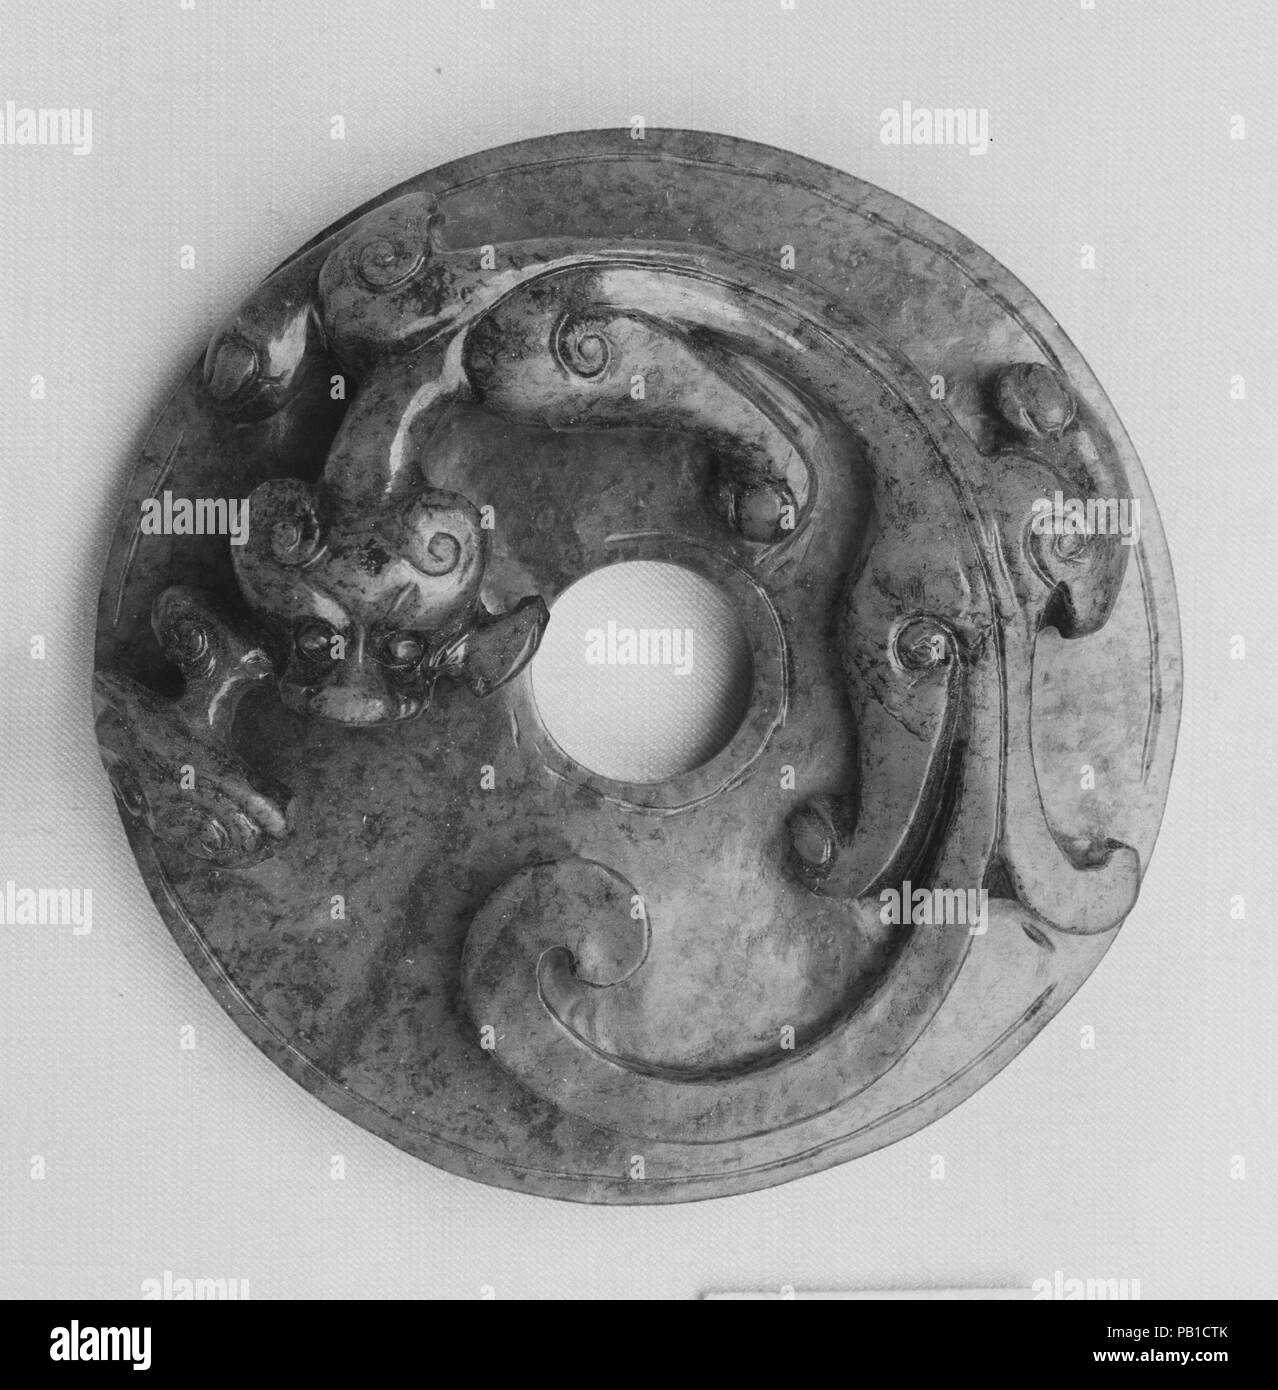 Disk. Culture: China. Dimensions: Diam. 2 5/8 in. (6.7 cm); Th. 3/4 in. (1.9 cm). Museum: Metropolitan Museum of Art, New York, USA. Stock Photo